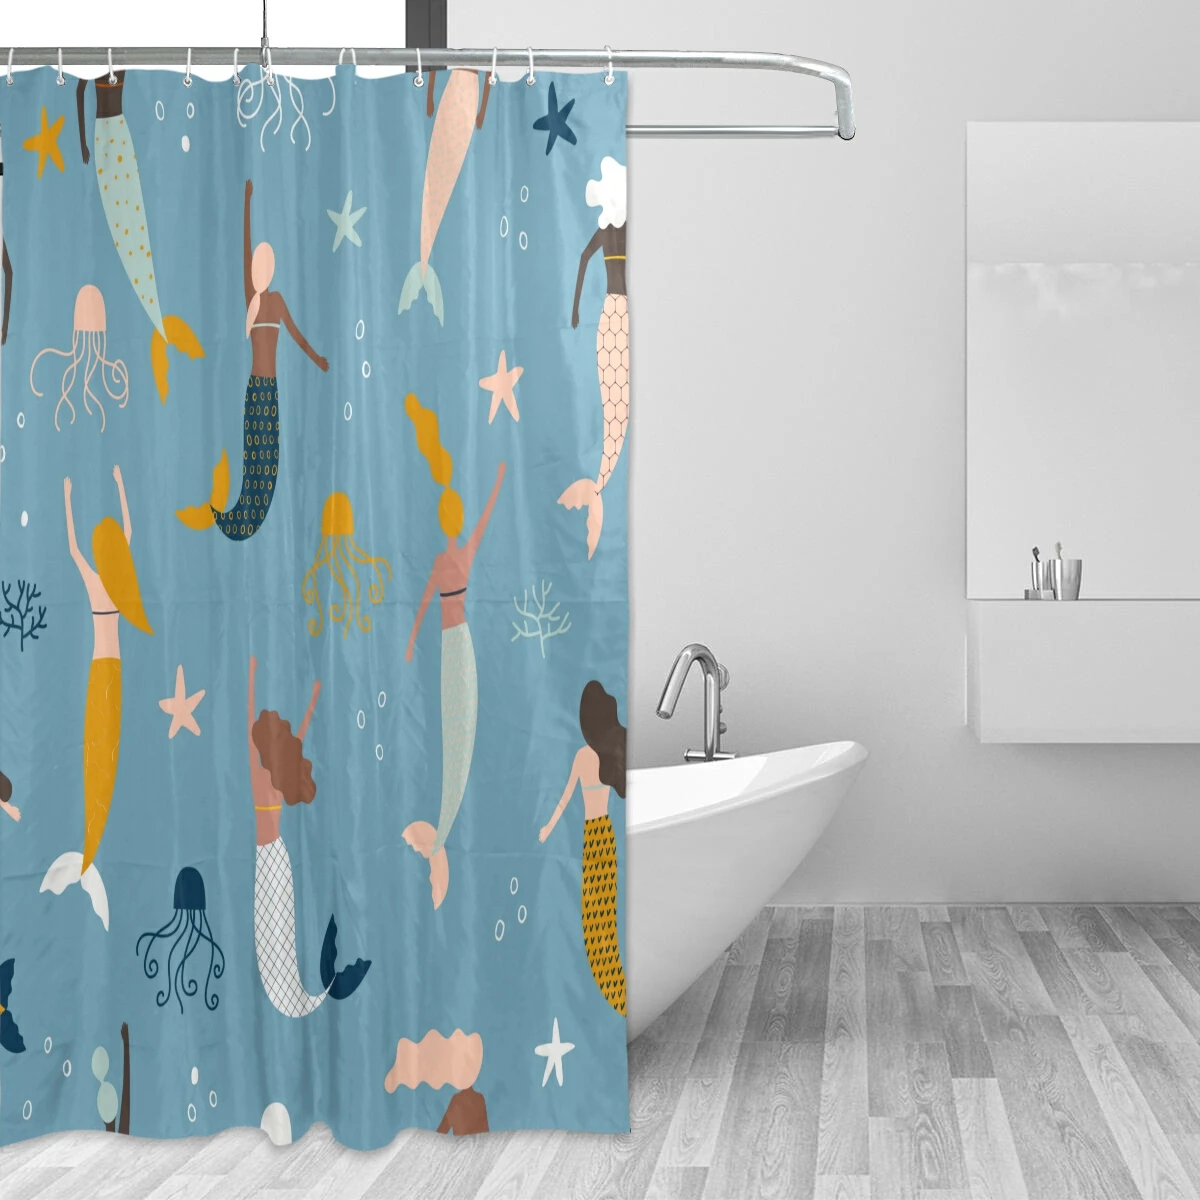 Deep Sea Whale Bathroom Decor Waterproof Fabric Mildew Shower Curtain & 12 Hooks 